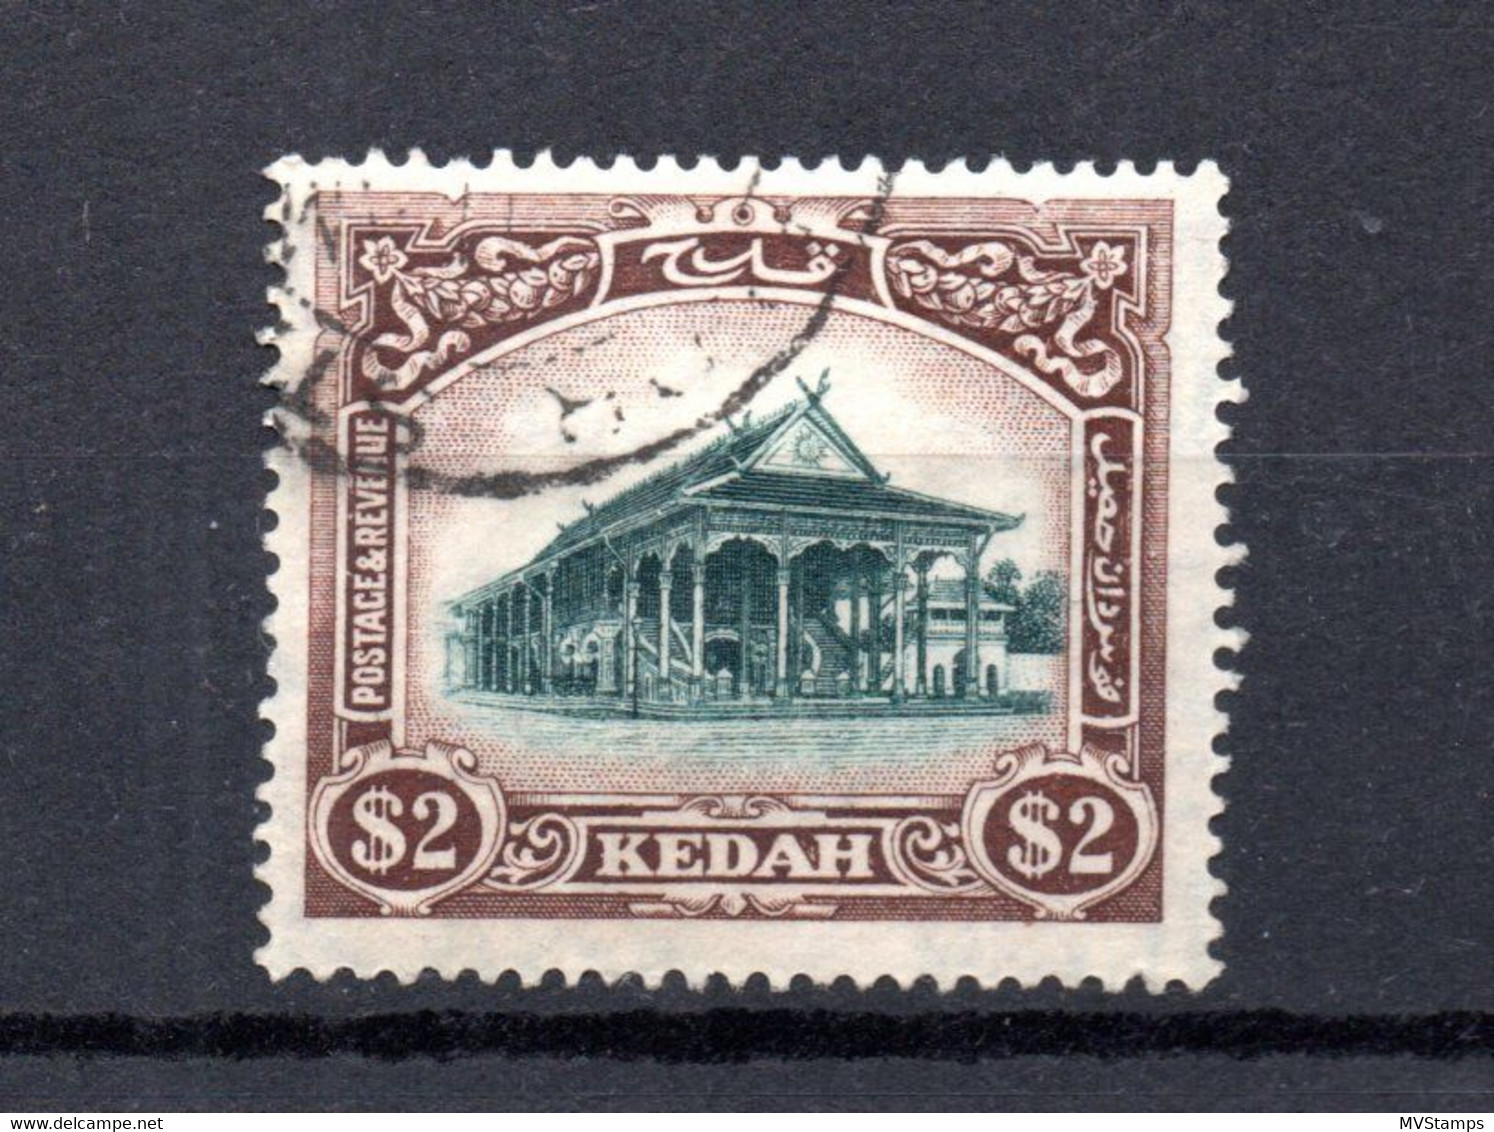 Kedah (Malaya States) 1921 Old $2.00 Stamp (Michel 33) Nice Used - Kedah